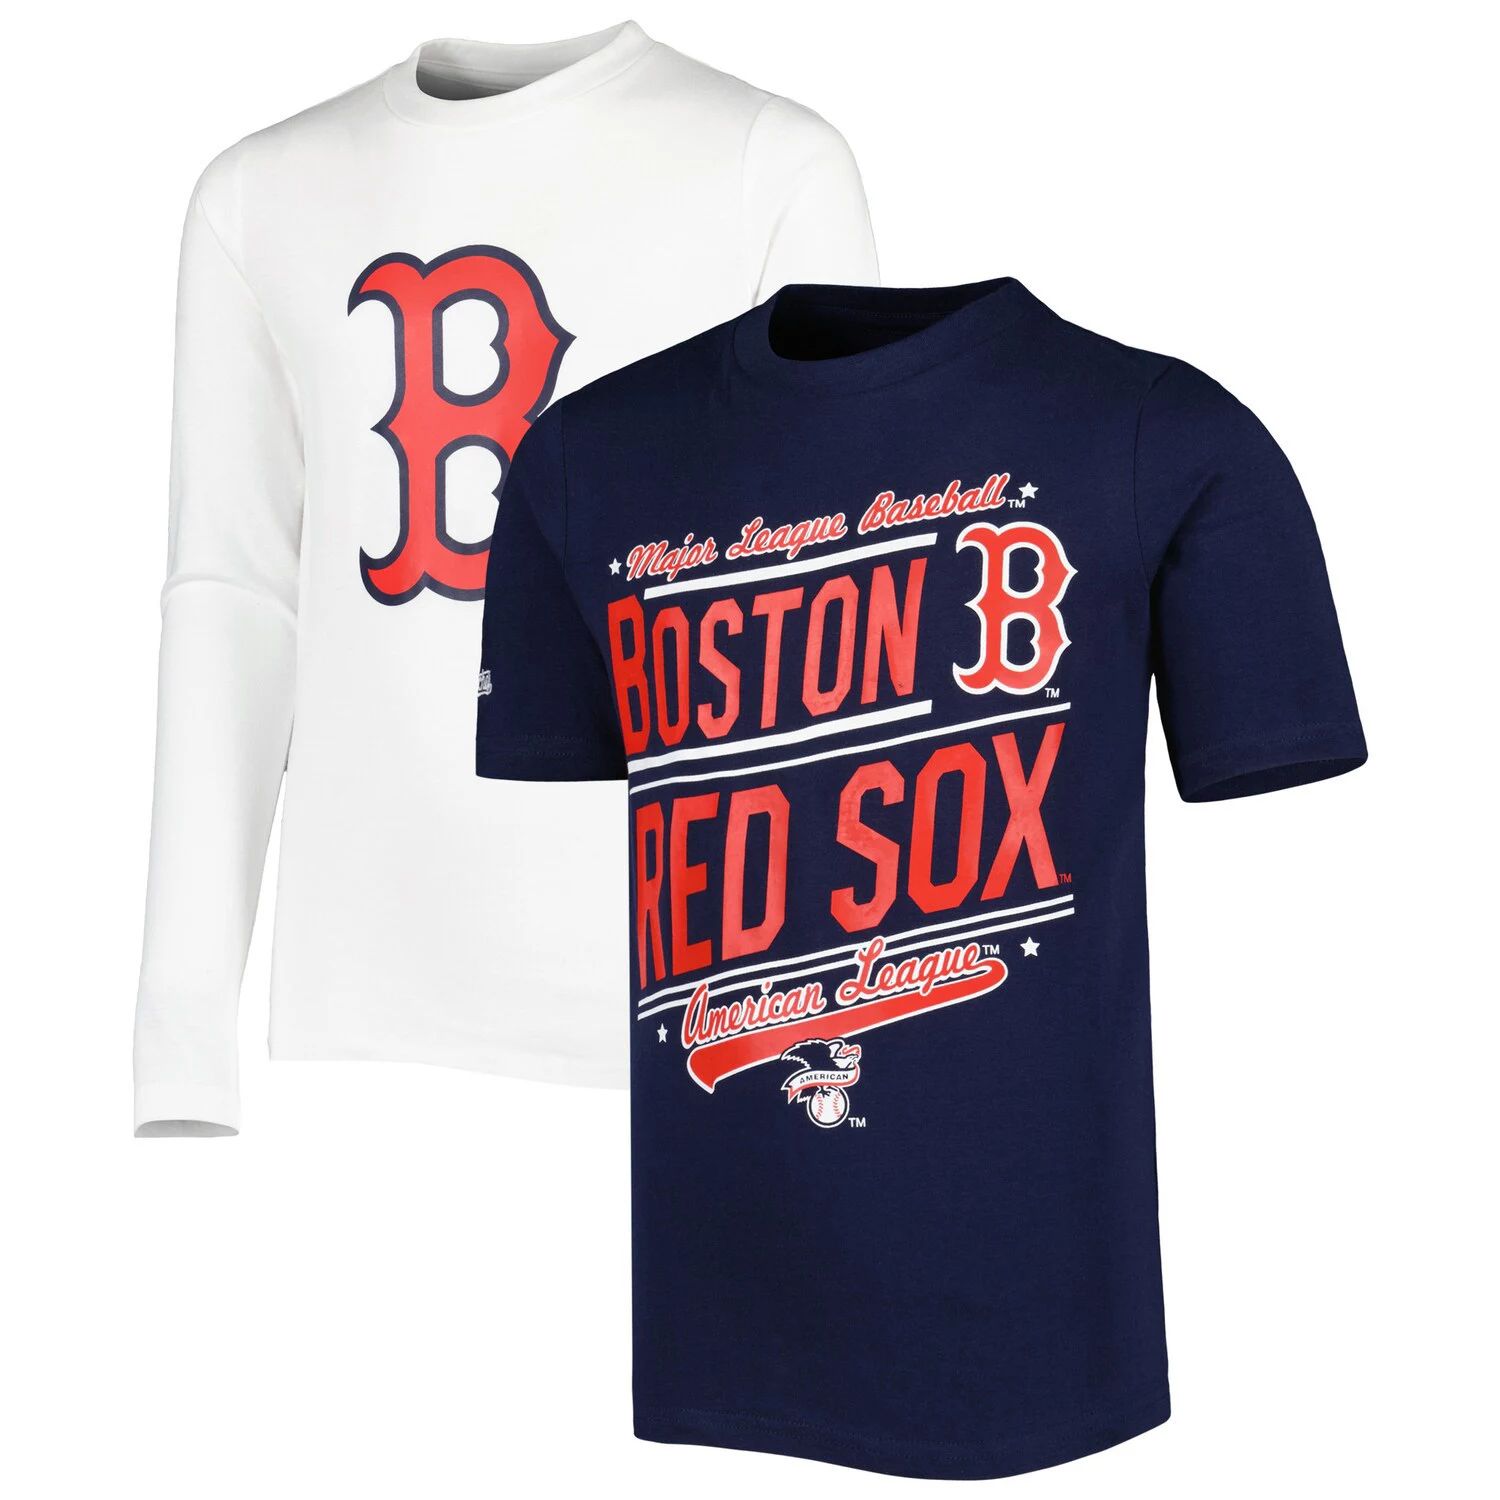 Темно-синий/белый комплект футболок Youth Stitches Boston Red Sox Stitches